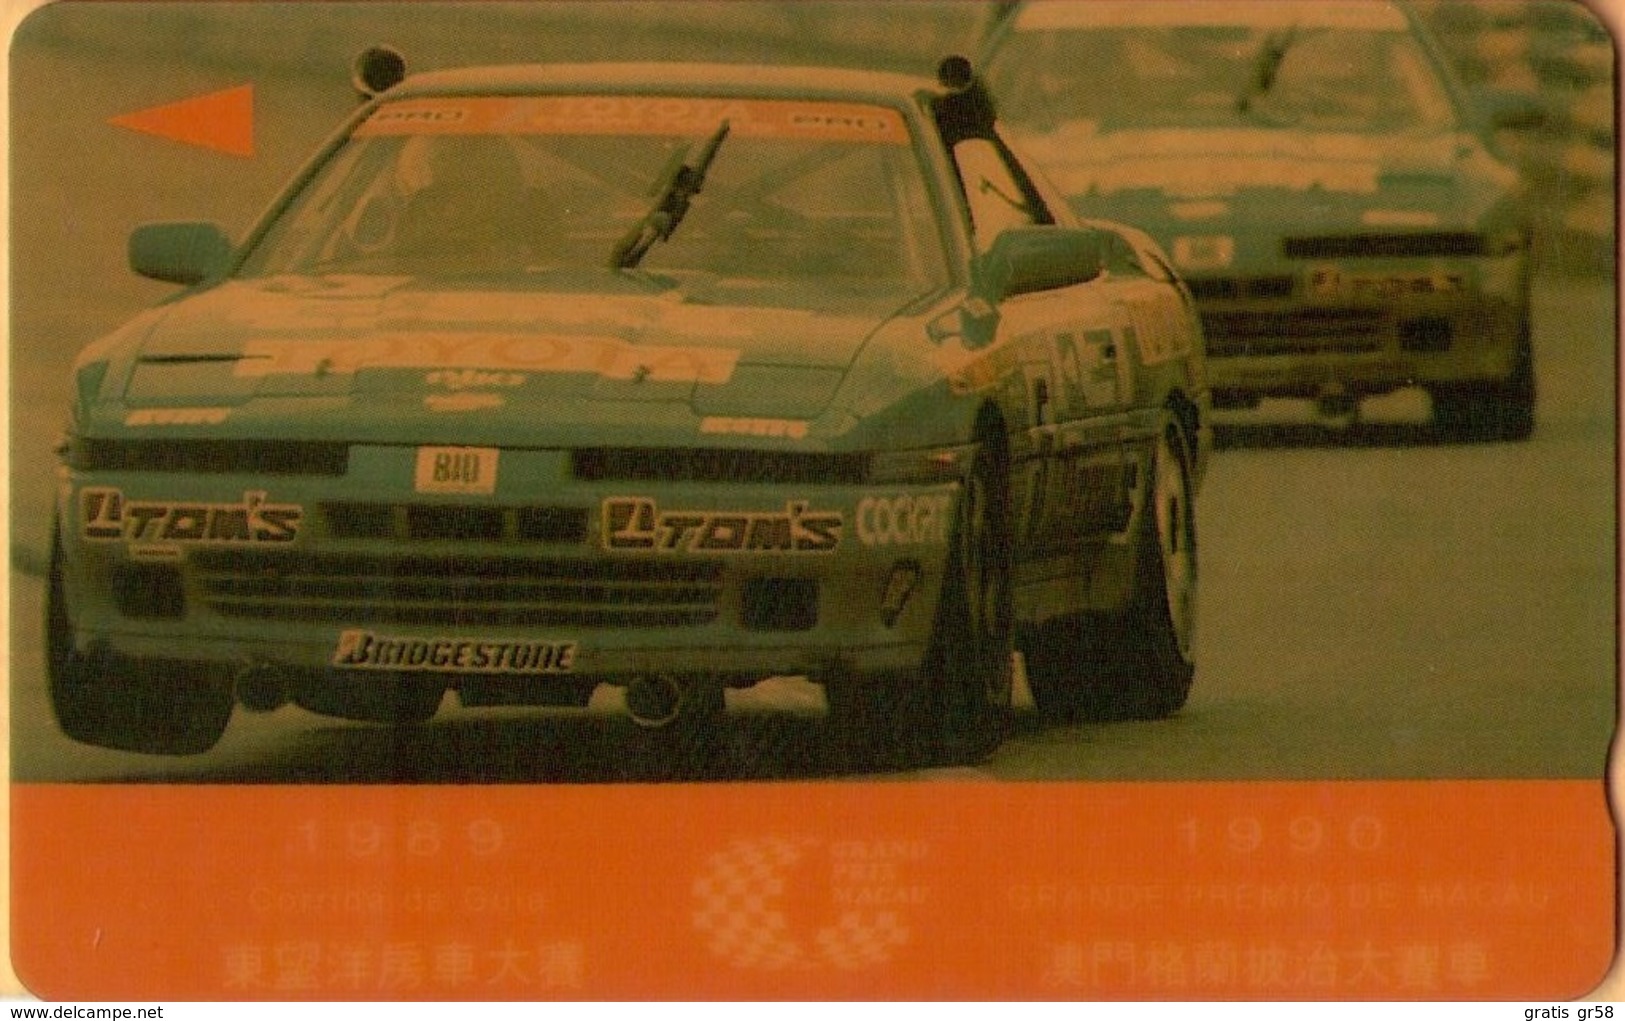 Macau - GPT, GTM 2MACB, Sports Cars, 10,000ex, 1990, Used - Macao